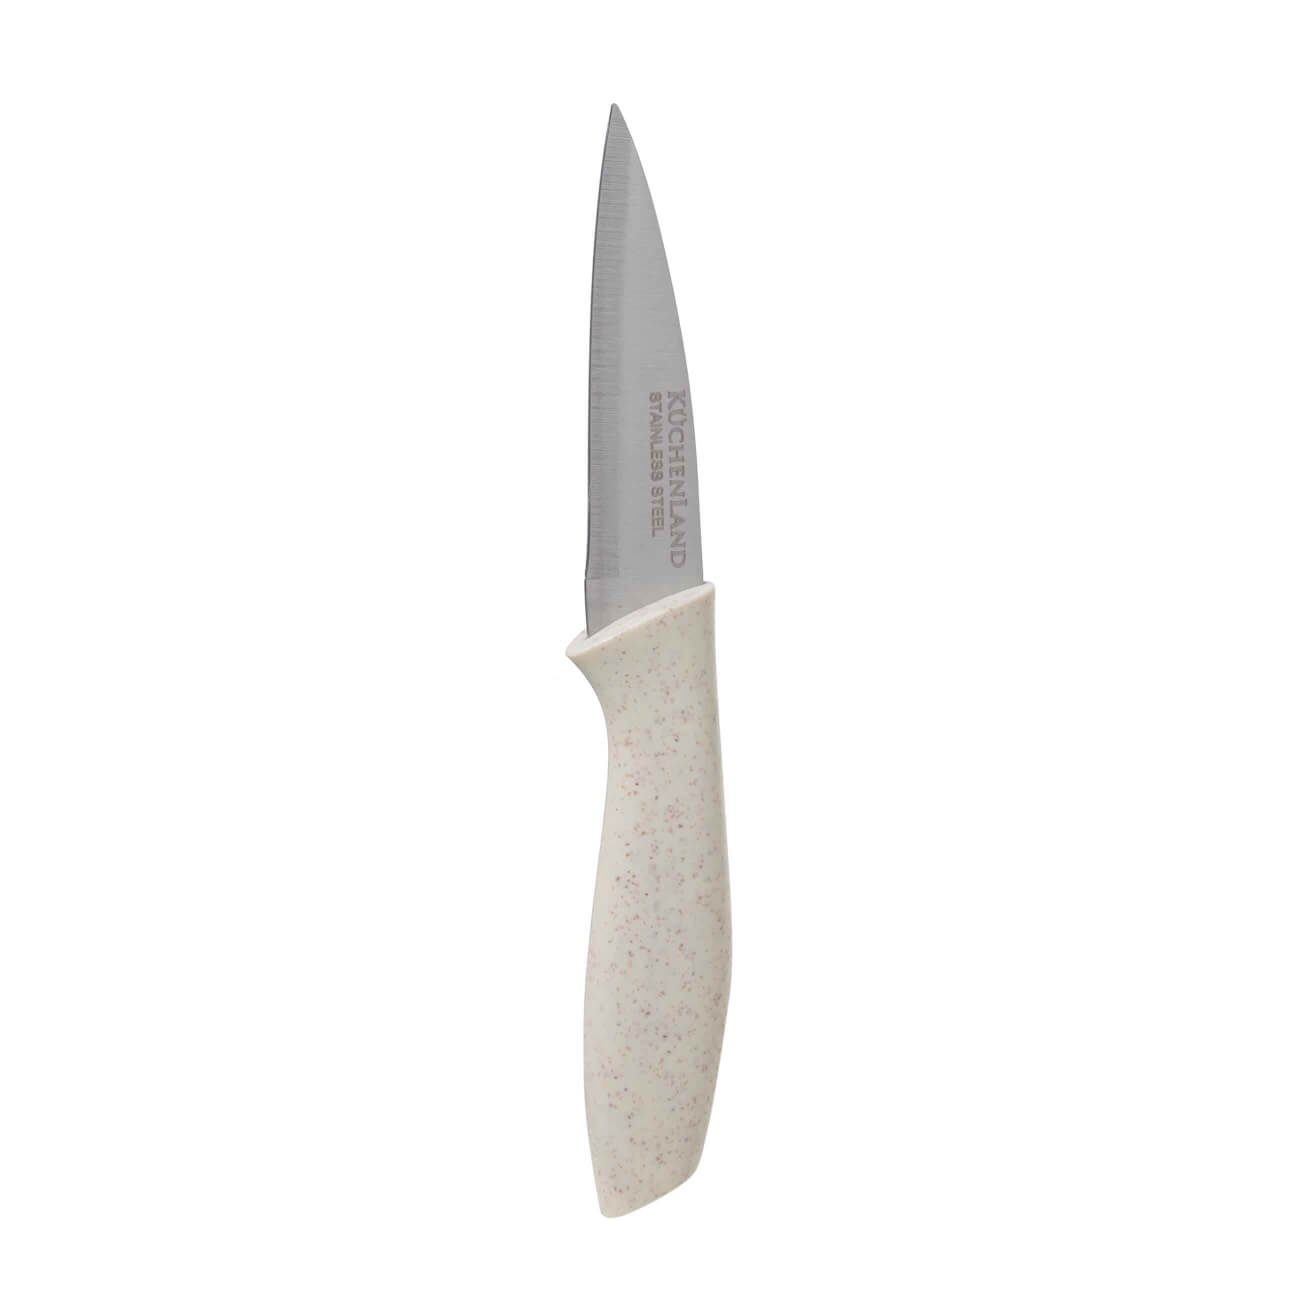 Нож для чистки овощей, 9 см, сталь/пластик, молочный, Speck-light нож для чистки овощей colour prof 240000 80 мм